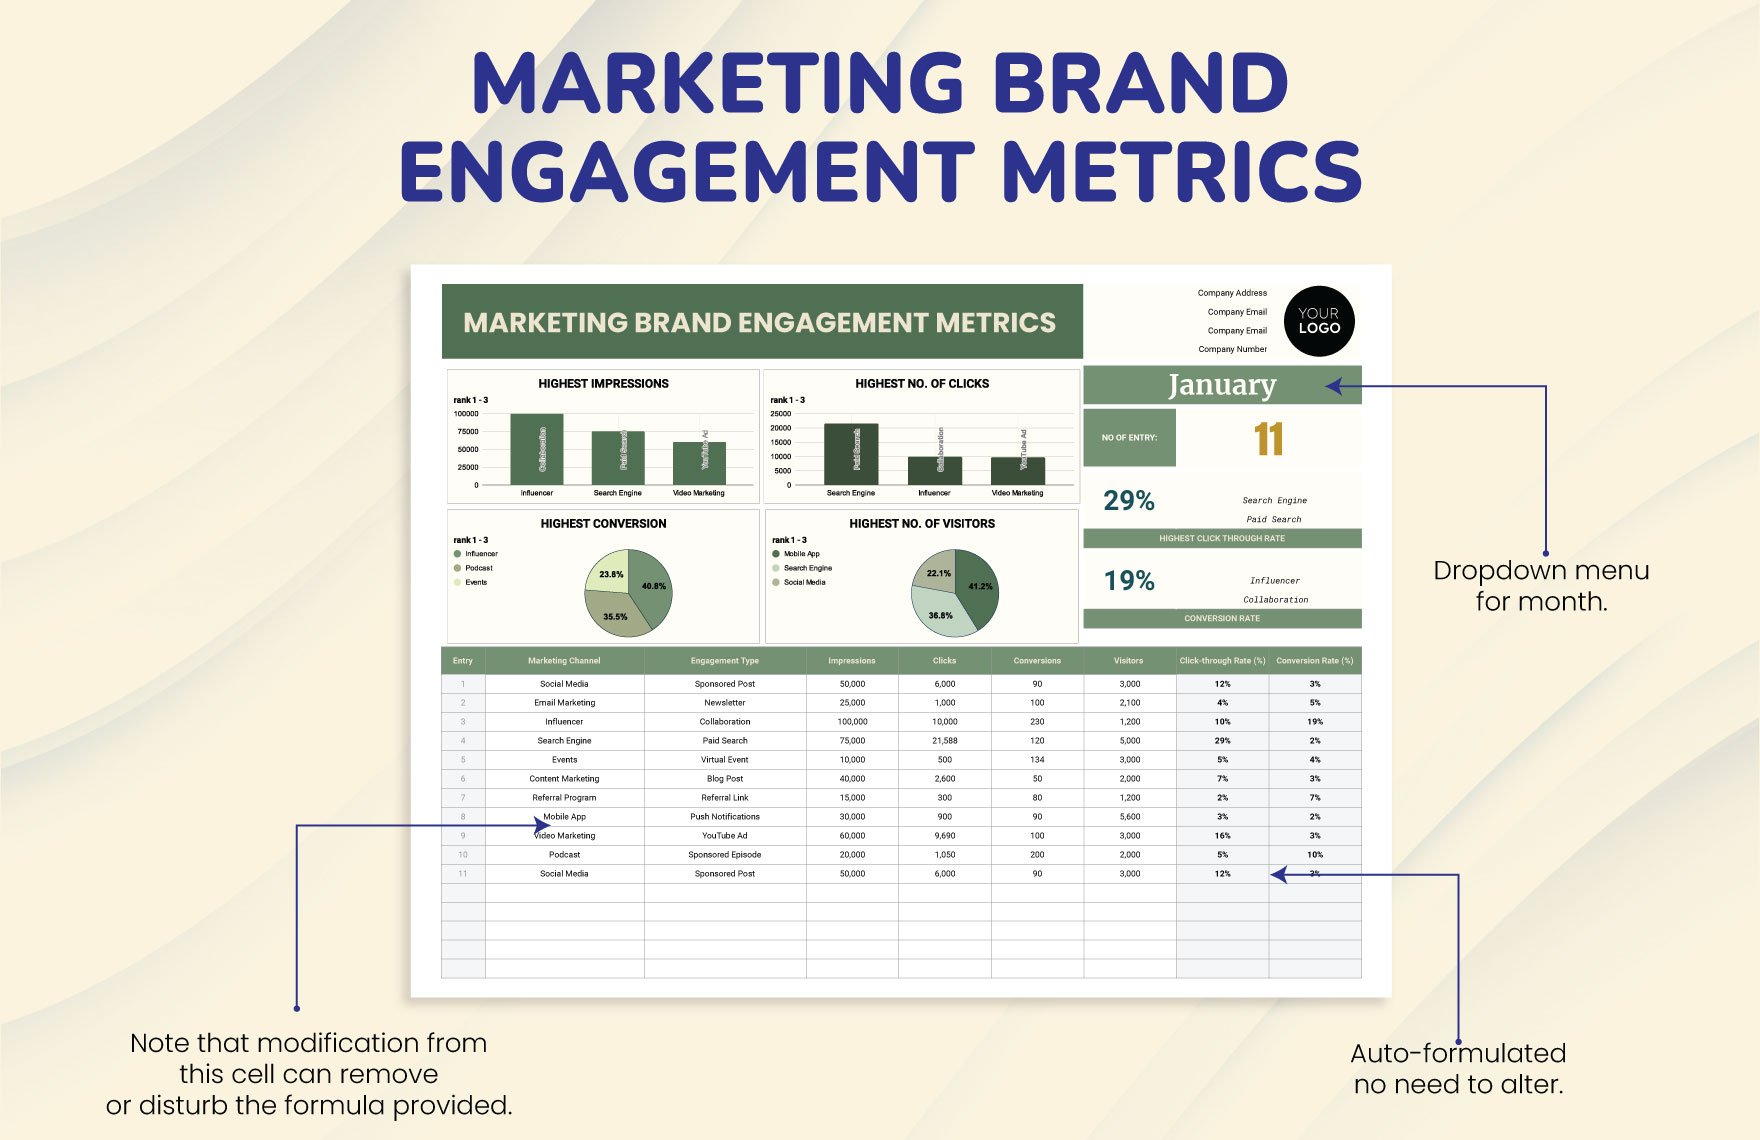 Marketing Brand Engagement Metrics Template